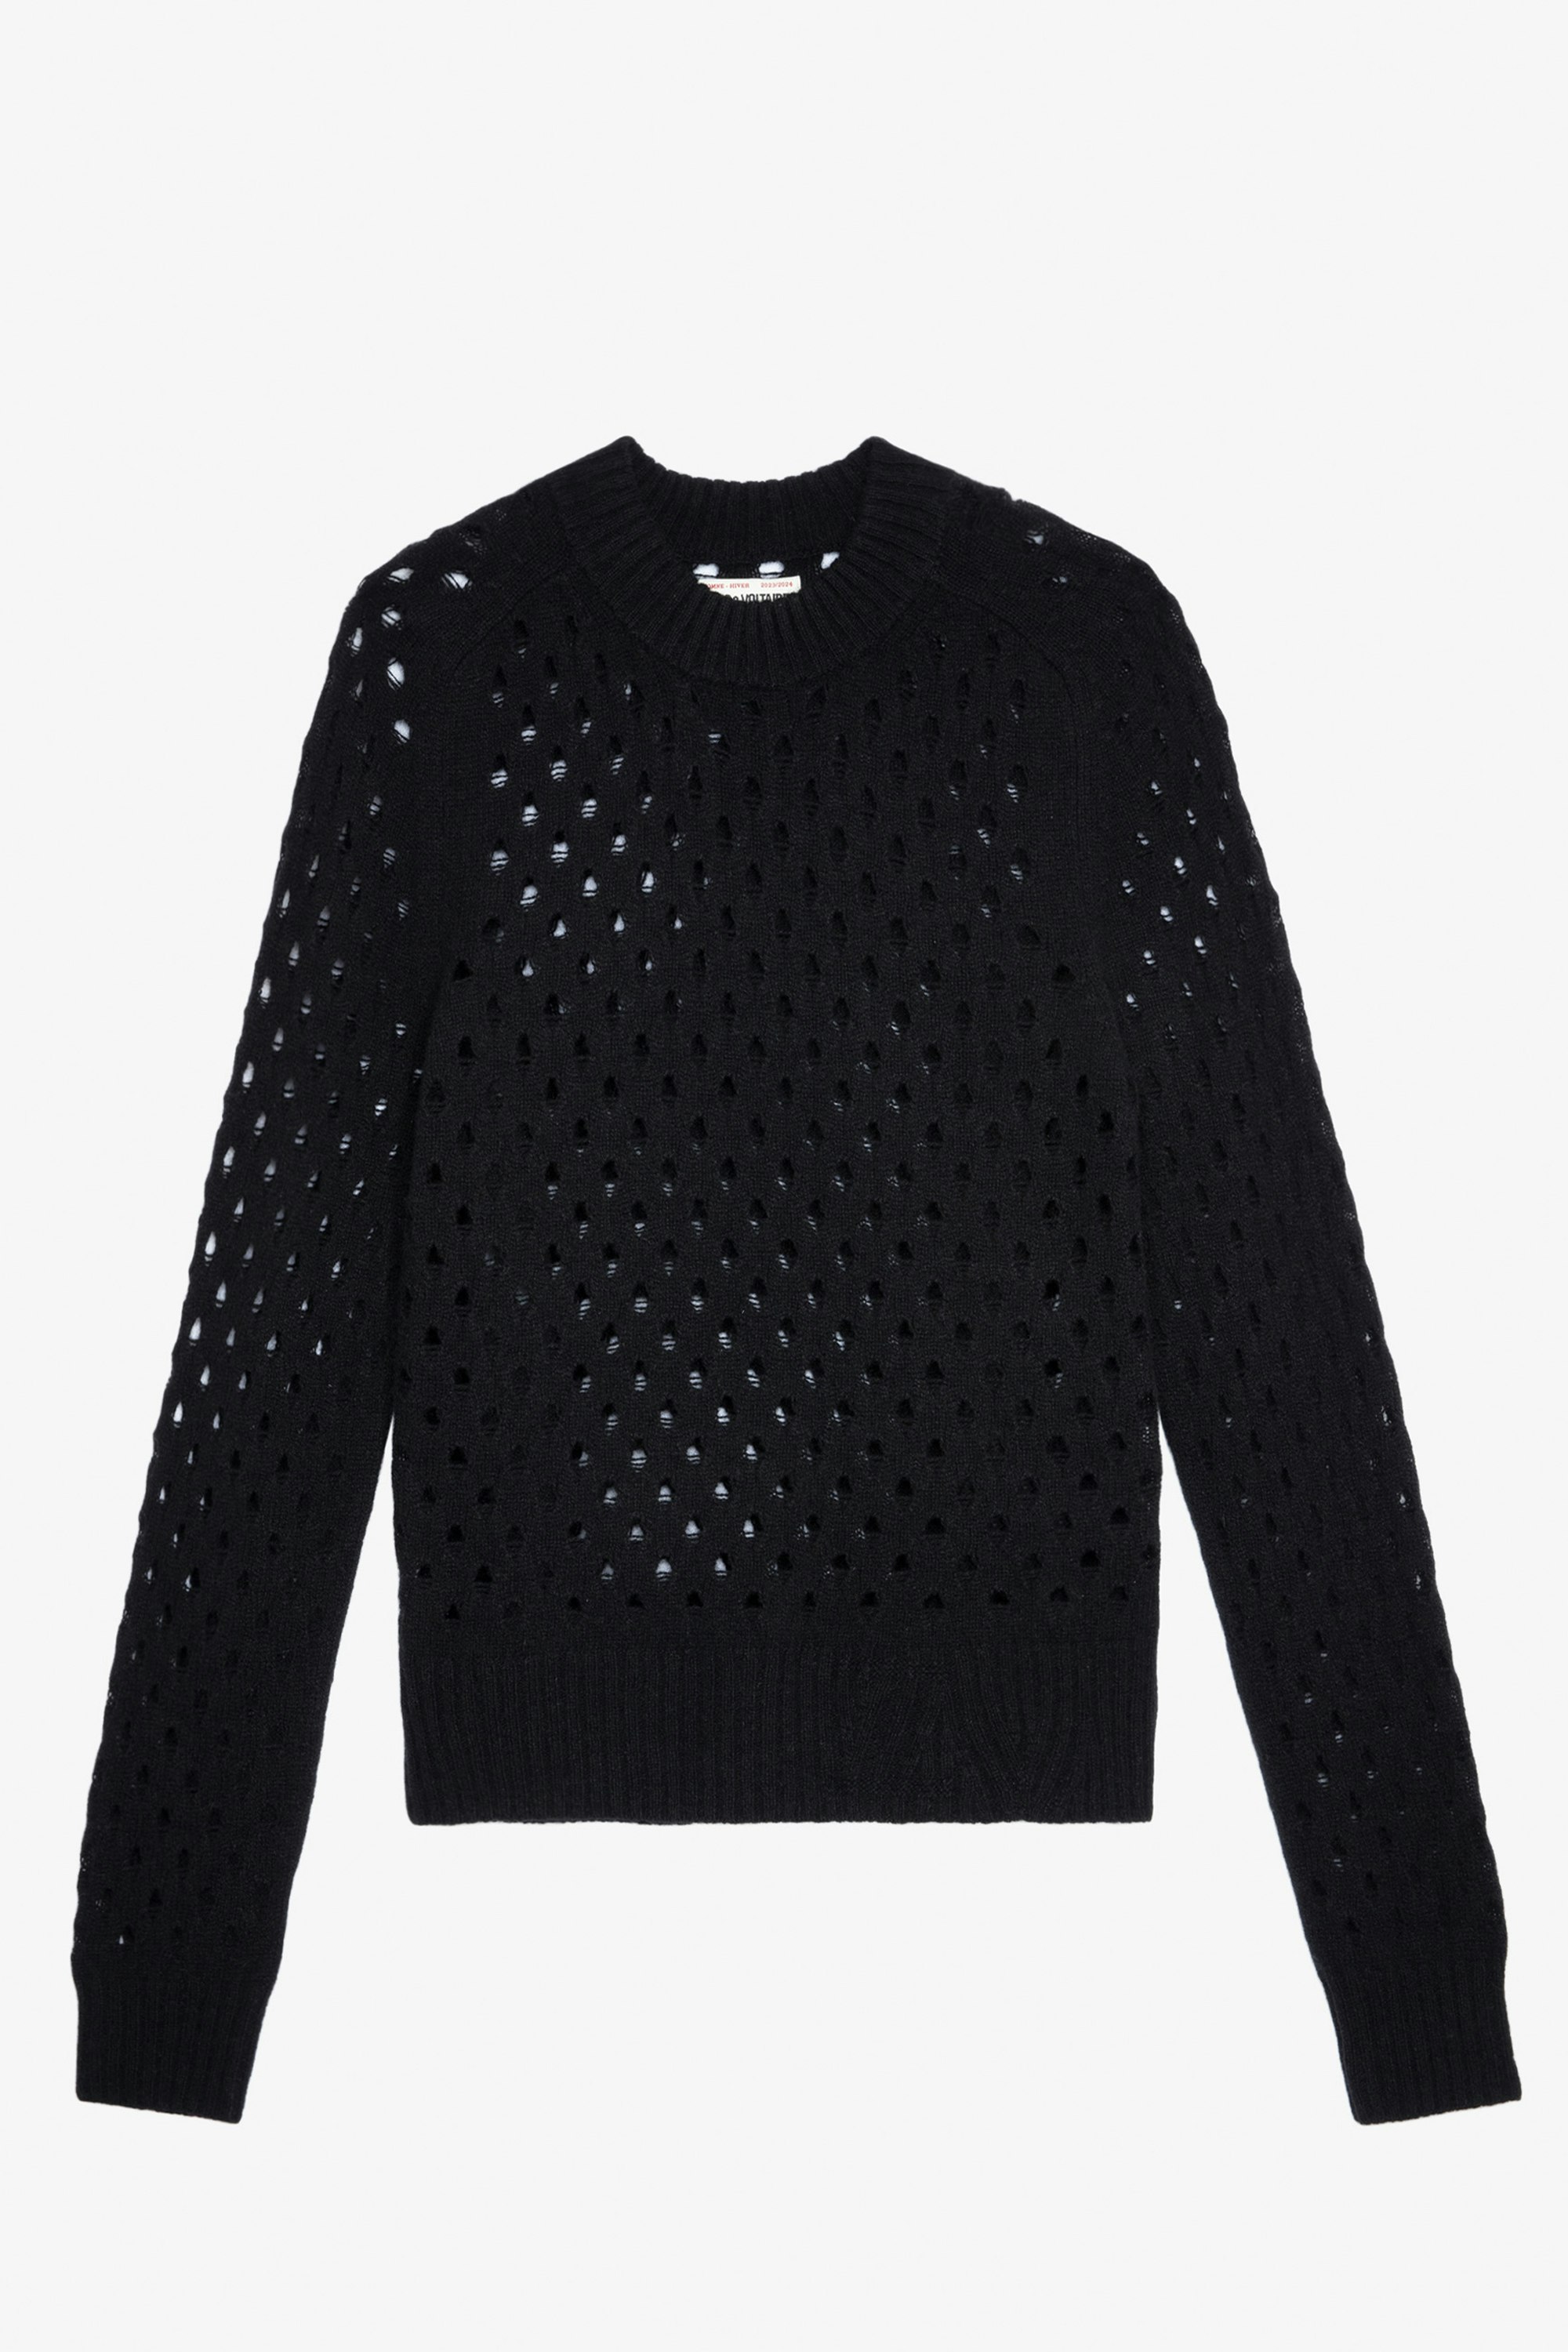 Lili Sweater - Unisex's distressed black open knit sweater.